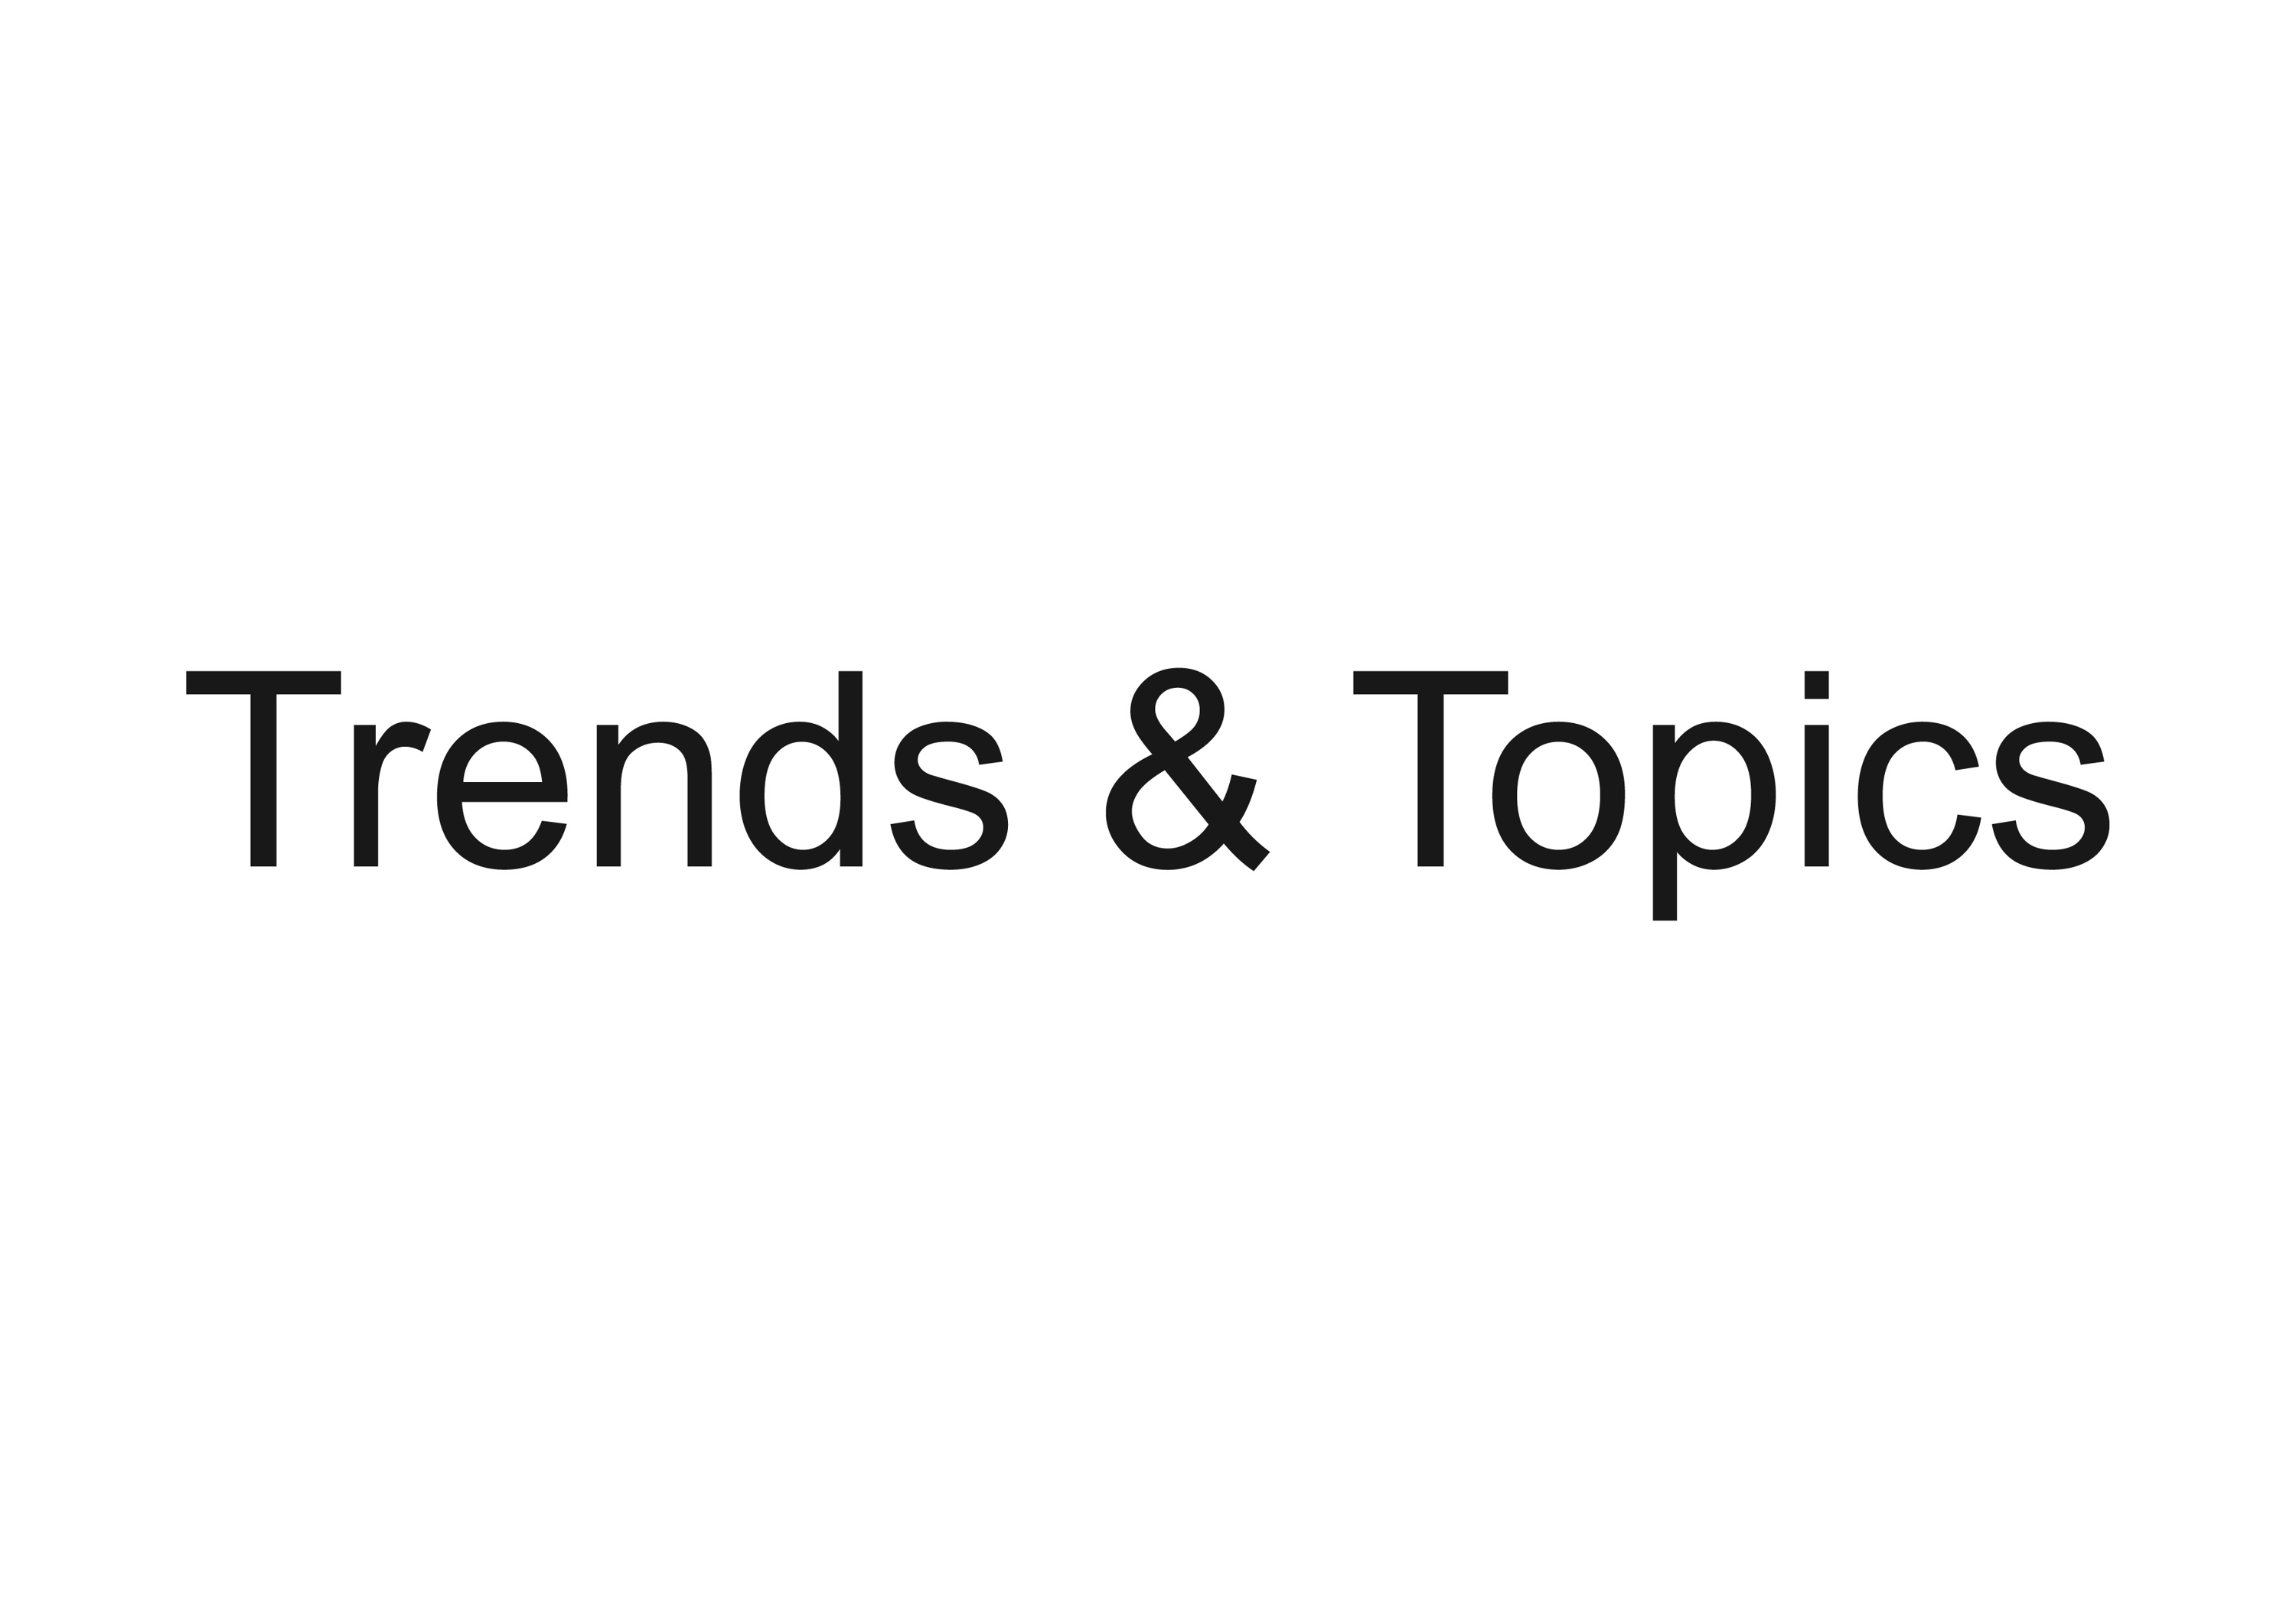 Trends & Topics